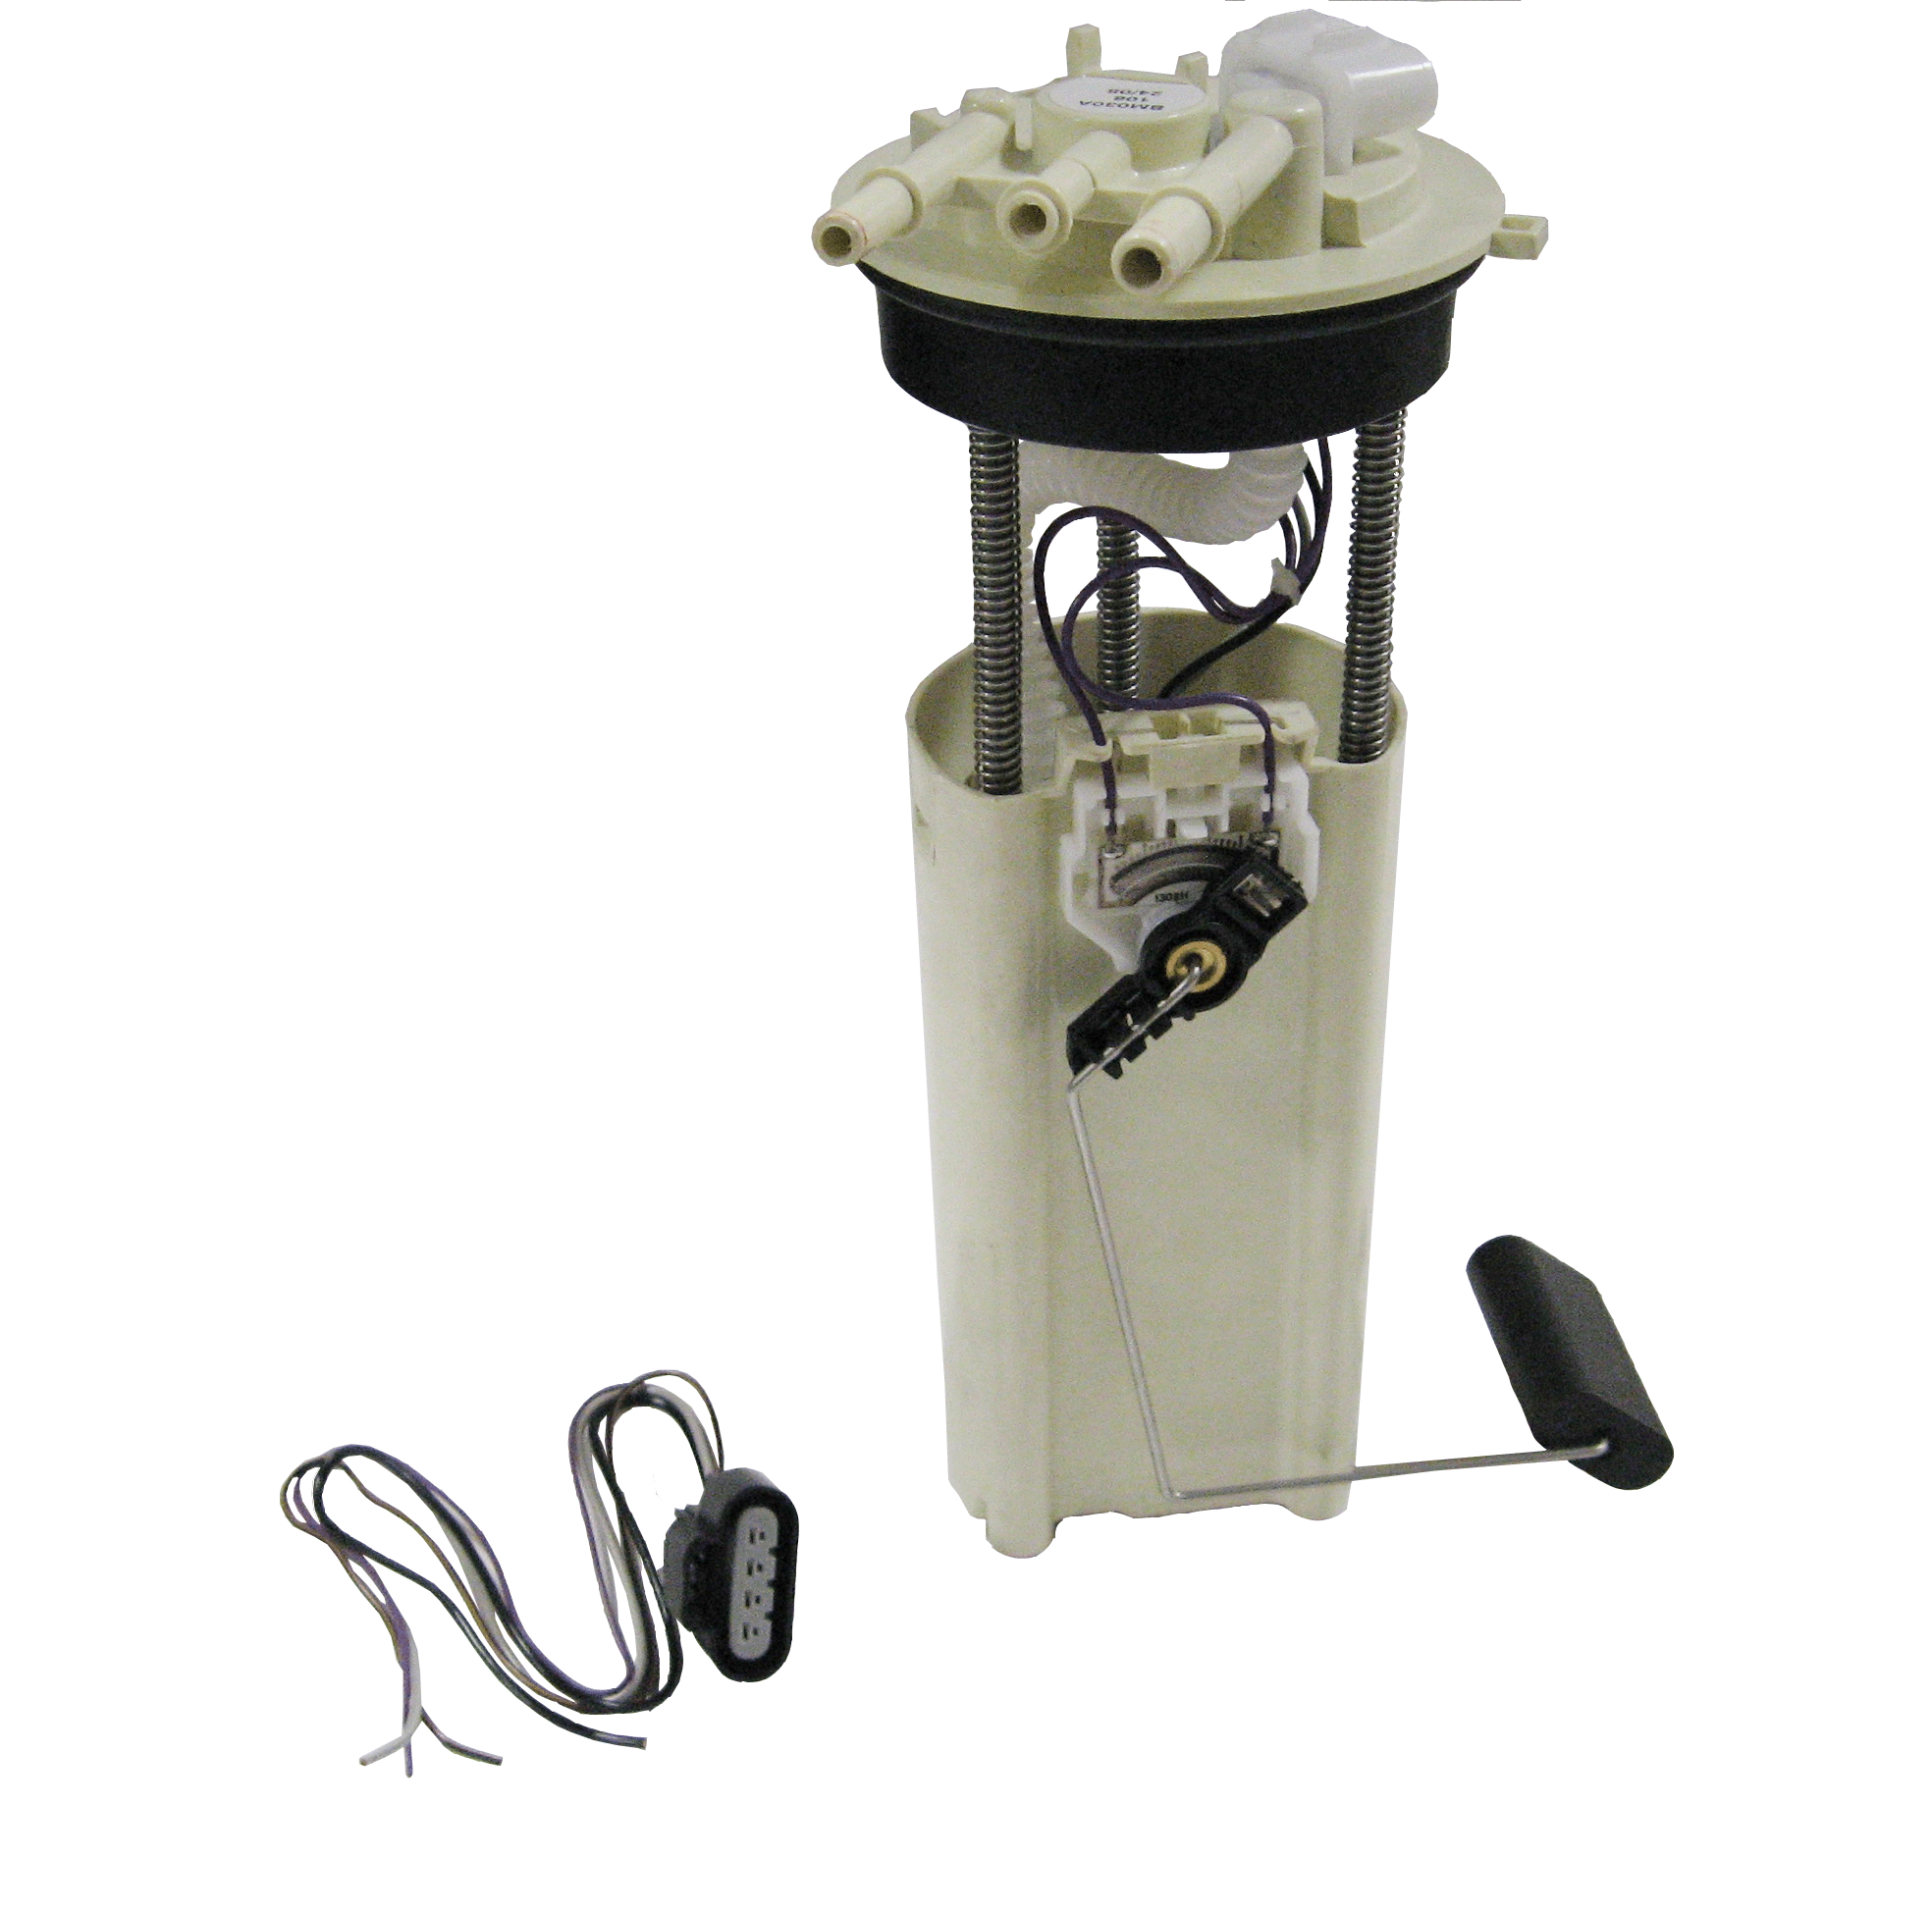 1999 Gmc yukon fuel pump relay #1